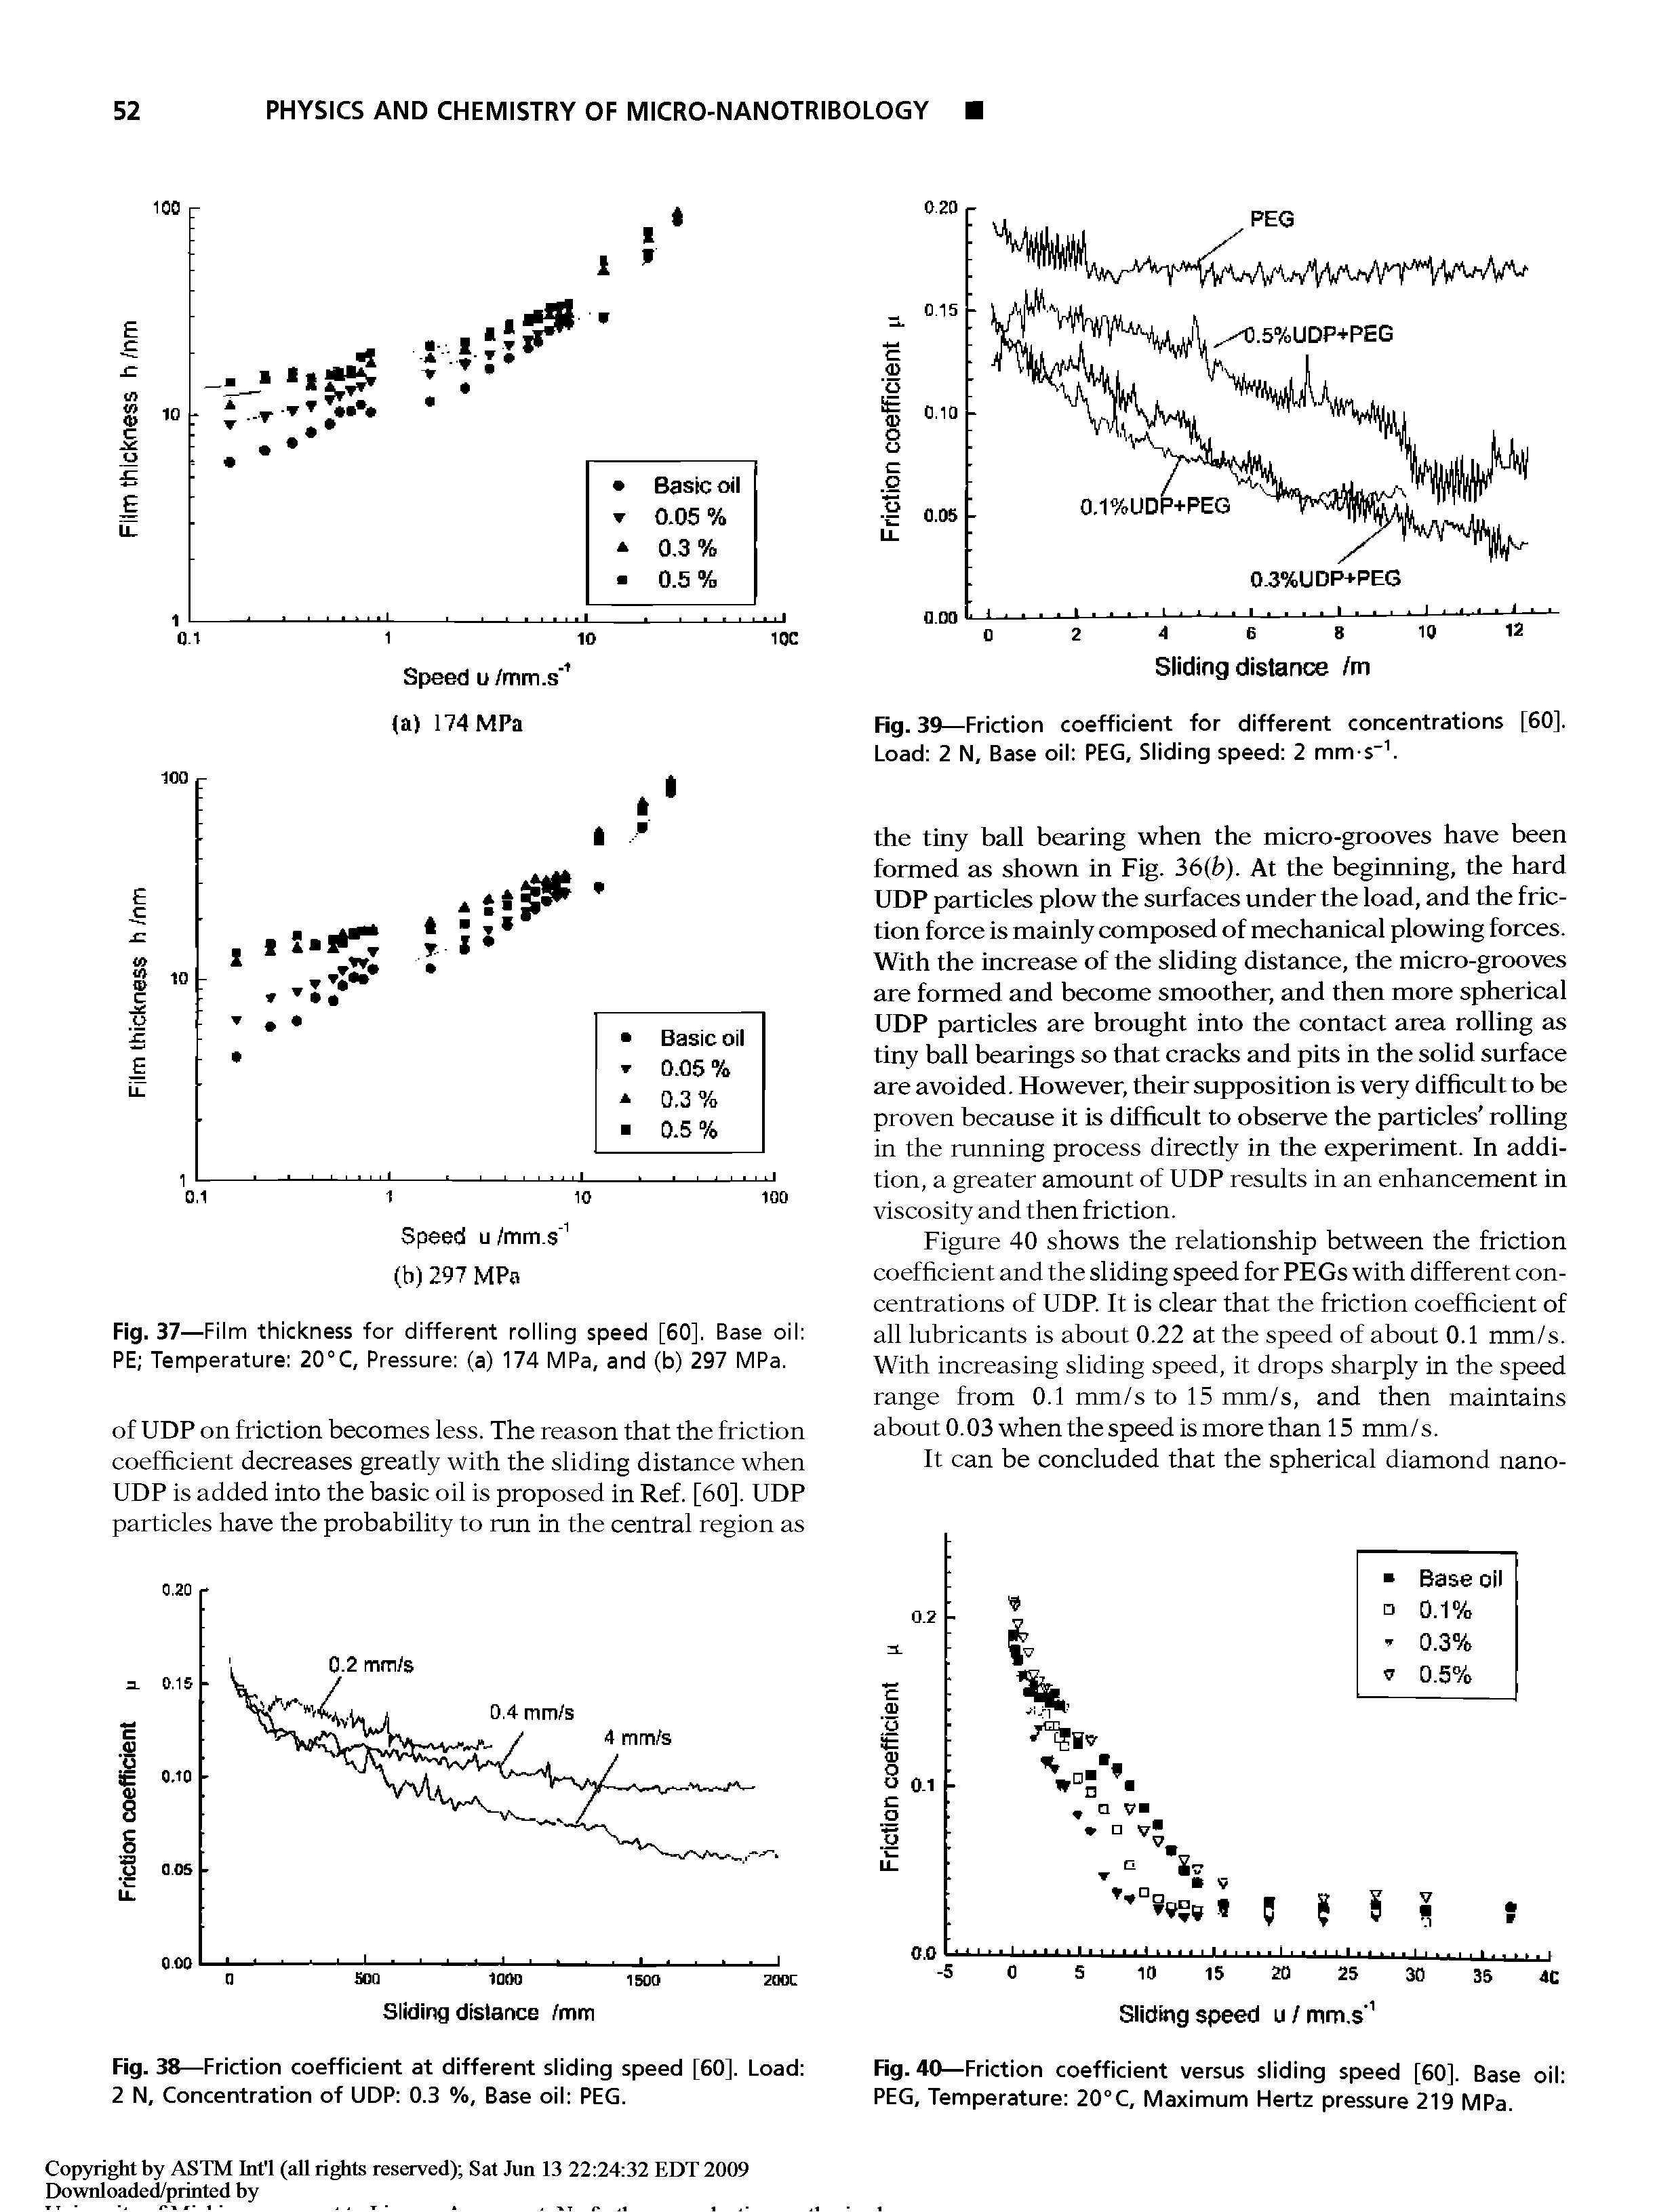 Fig. 38—Friction coefficient at different sliding speed [60]. Load 2 N, Concentration of UDP 0.3 %, Base oil PEG.